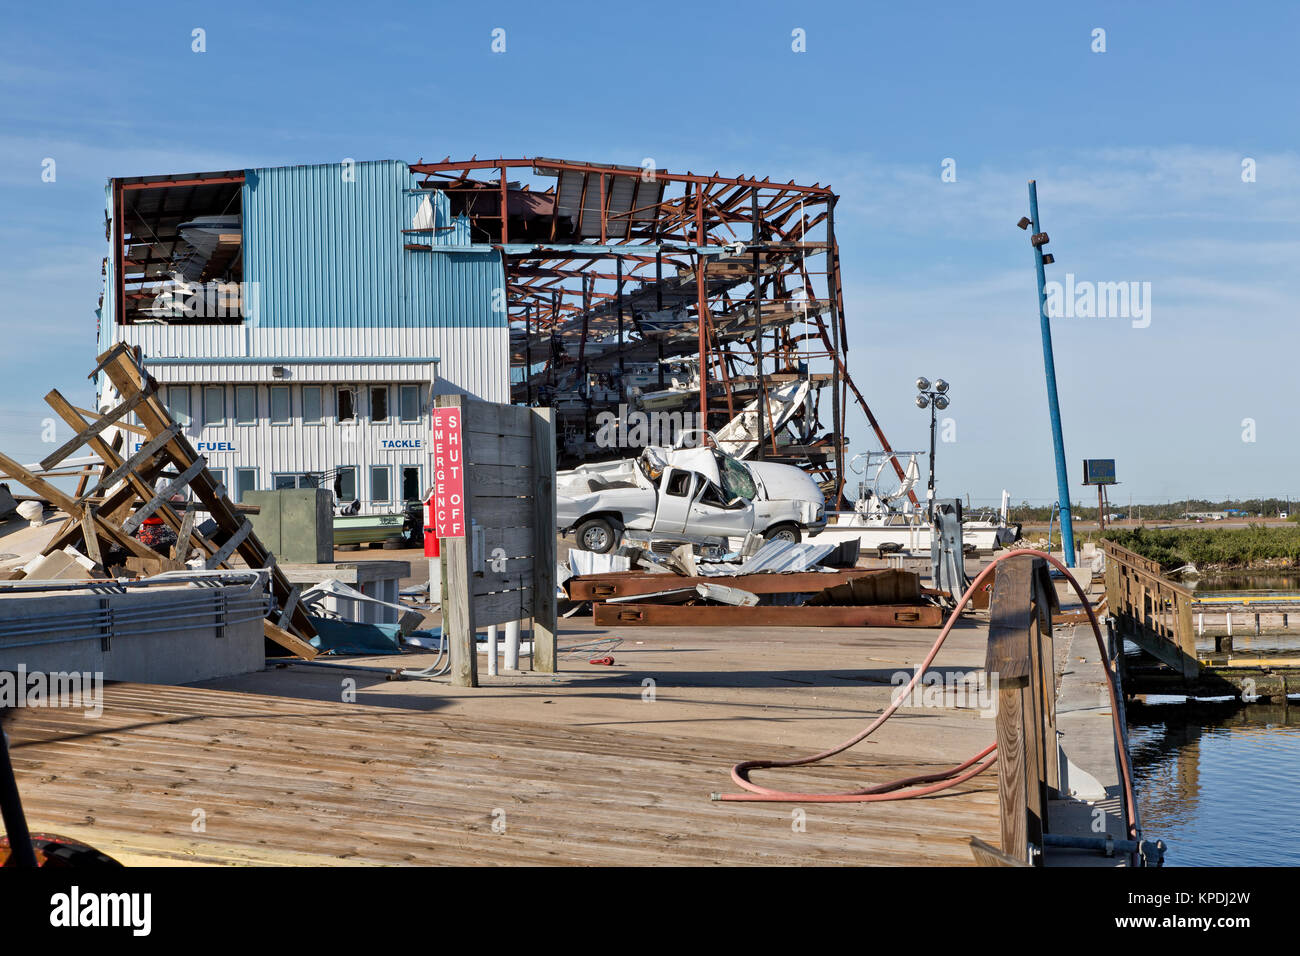 Hurrikan 'Harvey' 2017 Zerstörung von Cove Harbor Marina & Dry Stack, Lagereinrichtung, Rockport, Texas. Stockfoto